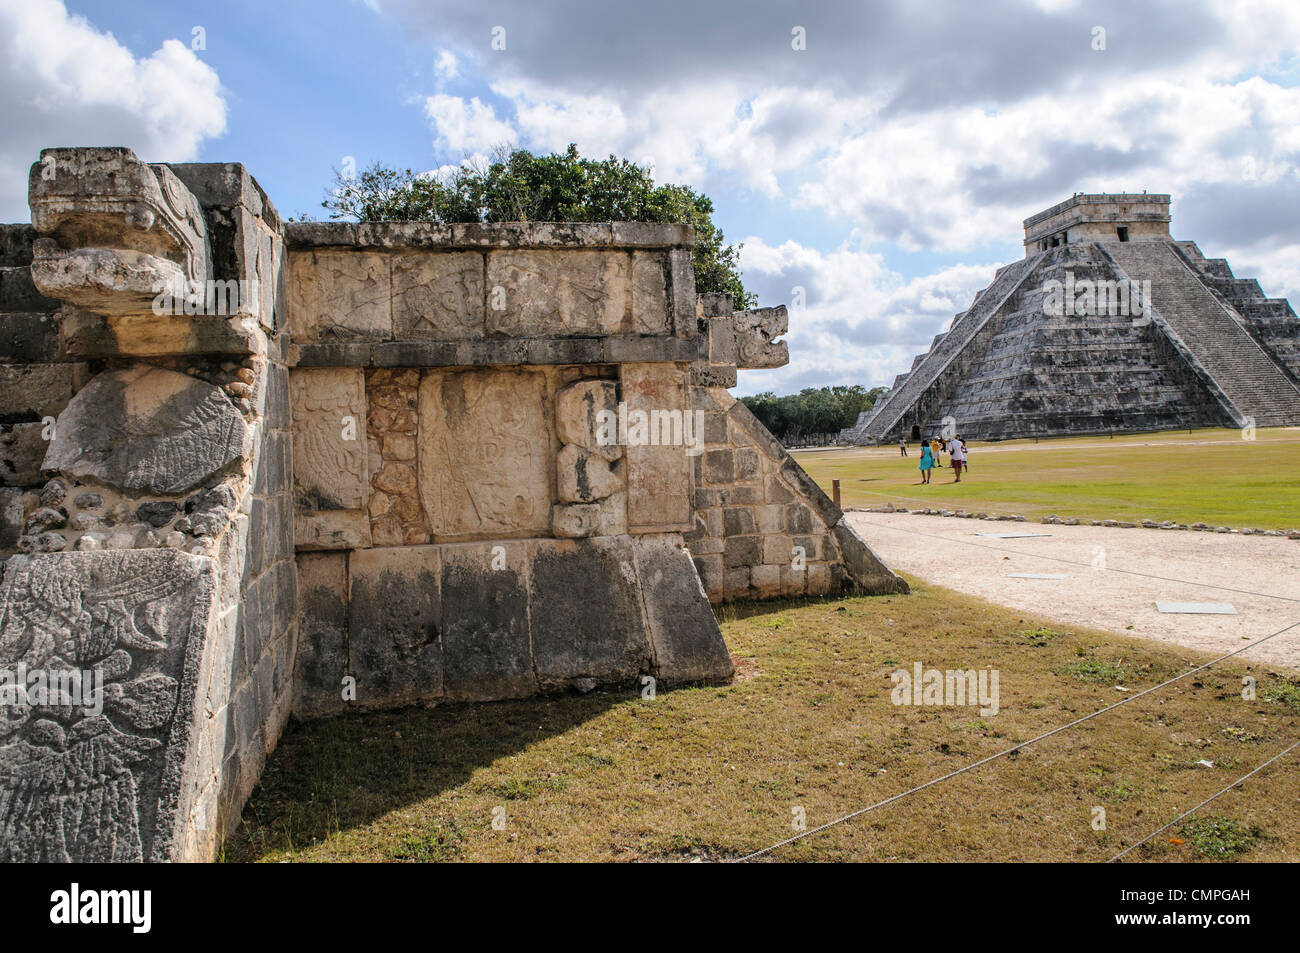 CHICHEN ITZA, Mexico - Buiding in front of Temple of Kukulkan (El Castillo) at Chichen Itza Archeological Zone, ruins of a major Maya civilization city in the heart of Mexico's Yucatan Peninsula. Stock Photo